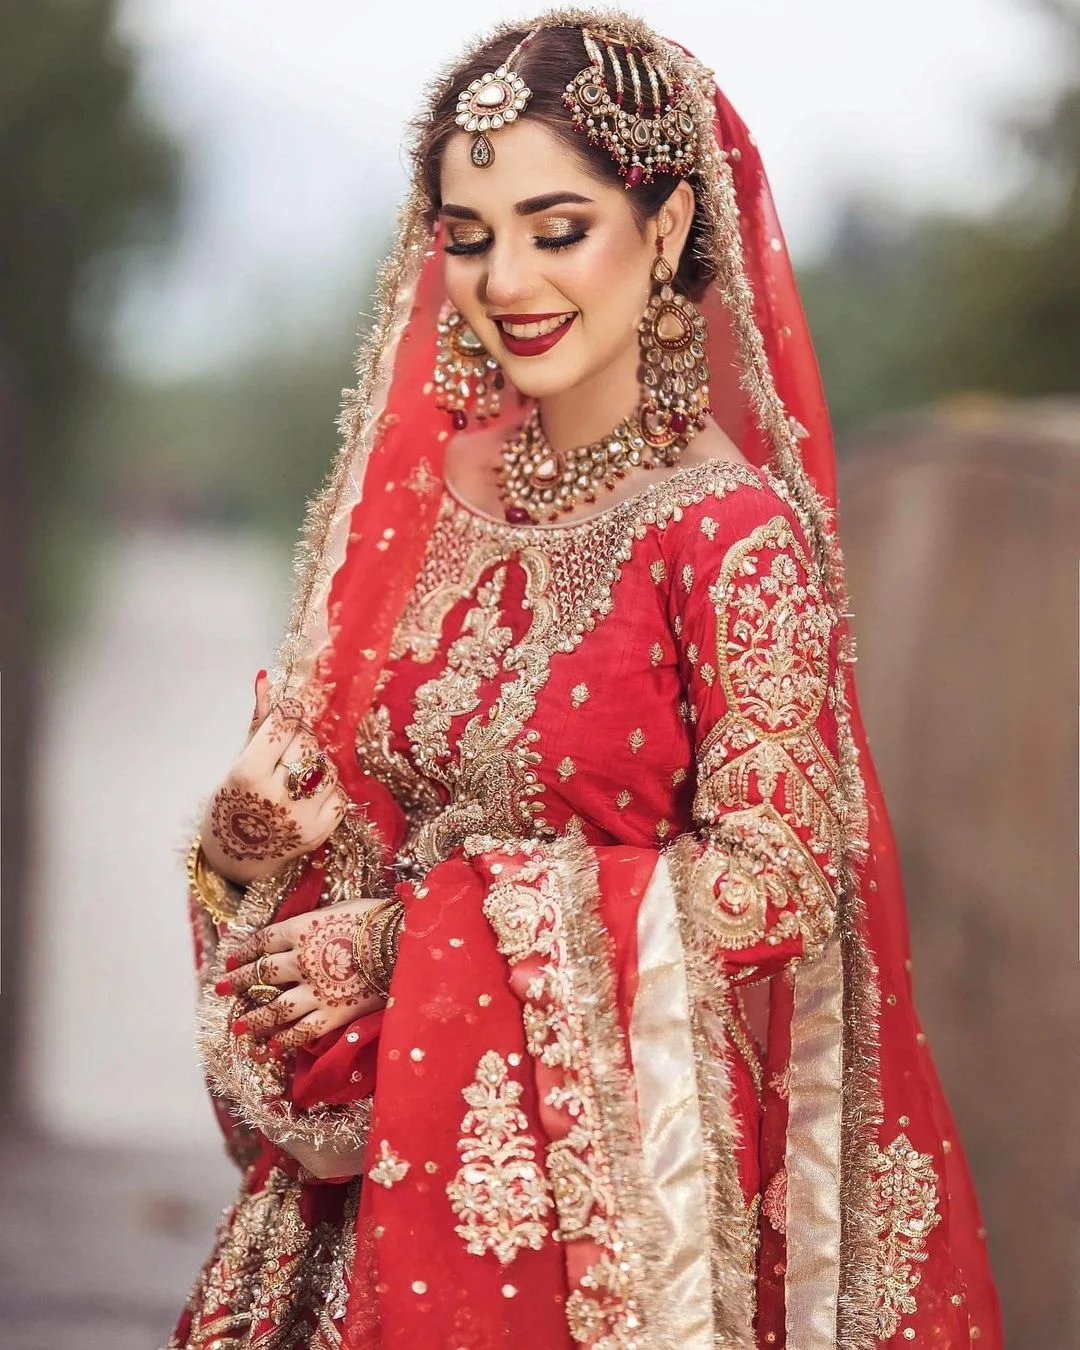 Bride DP in Red Dress